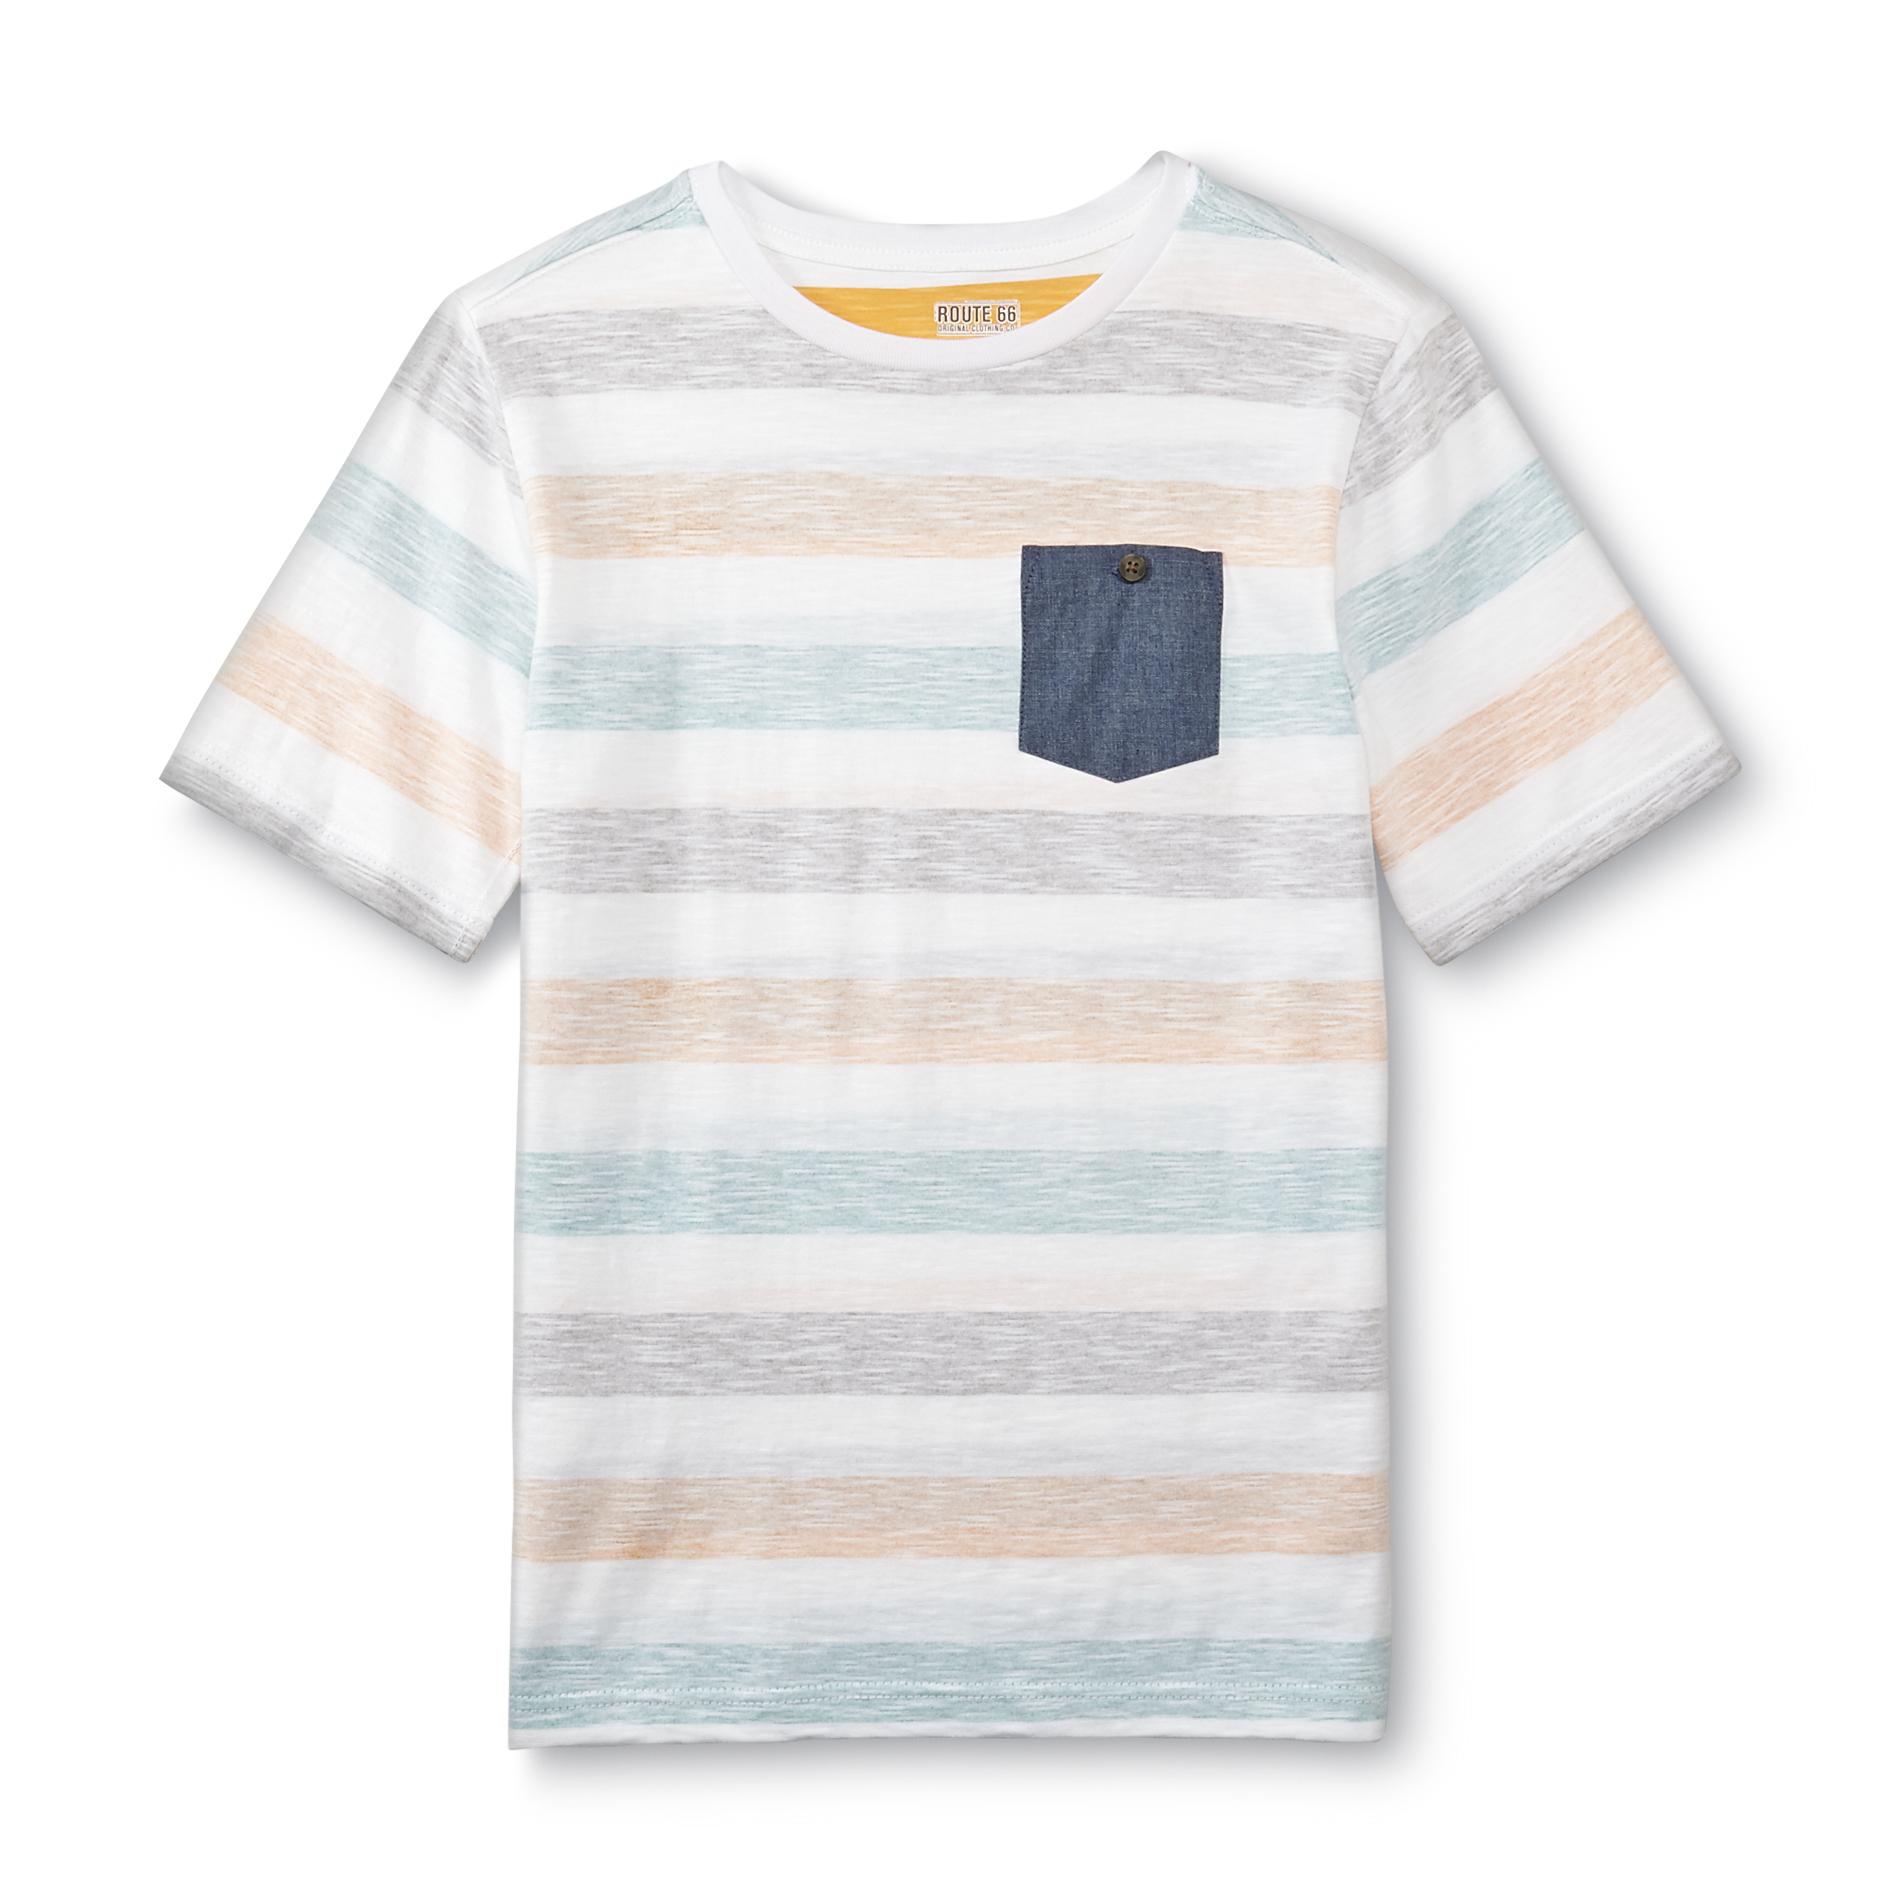 Route 66 Boy's Pocket T-Shirt - Striped